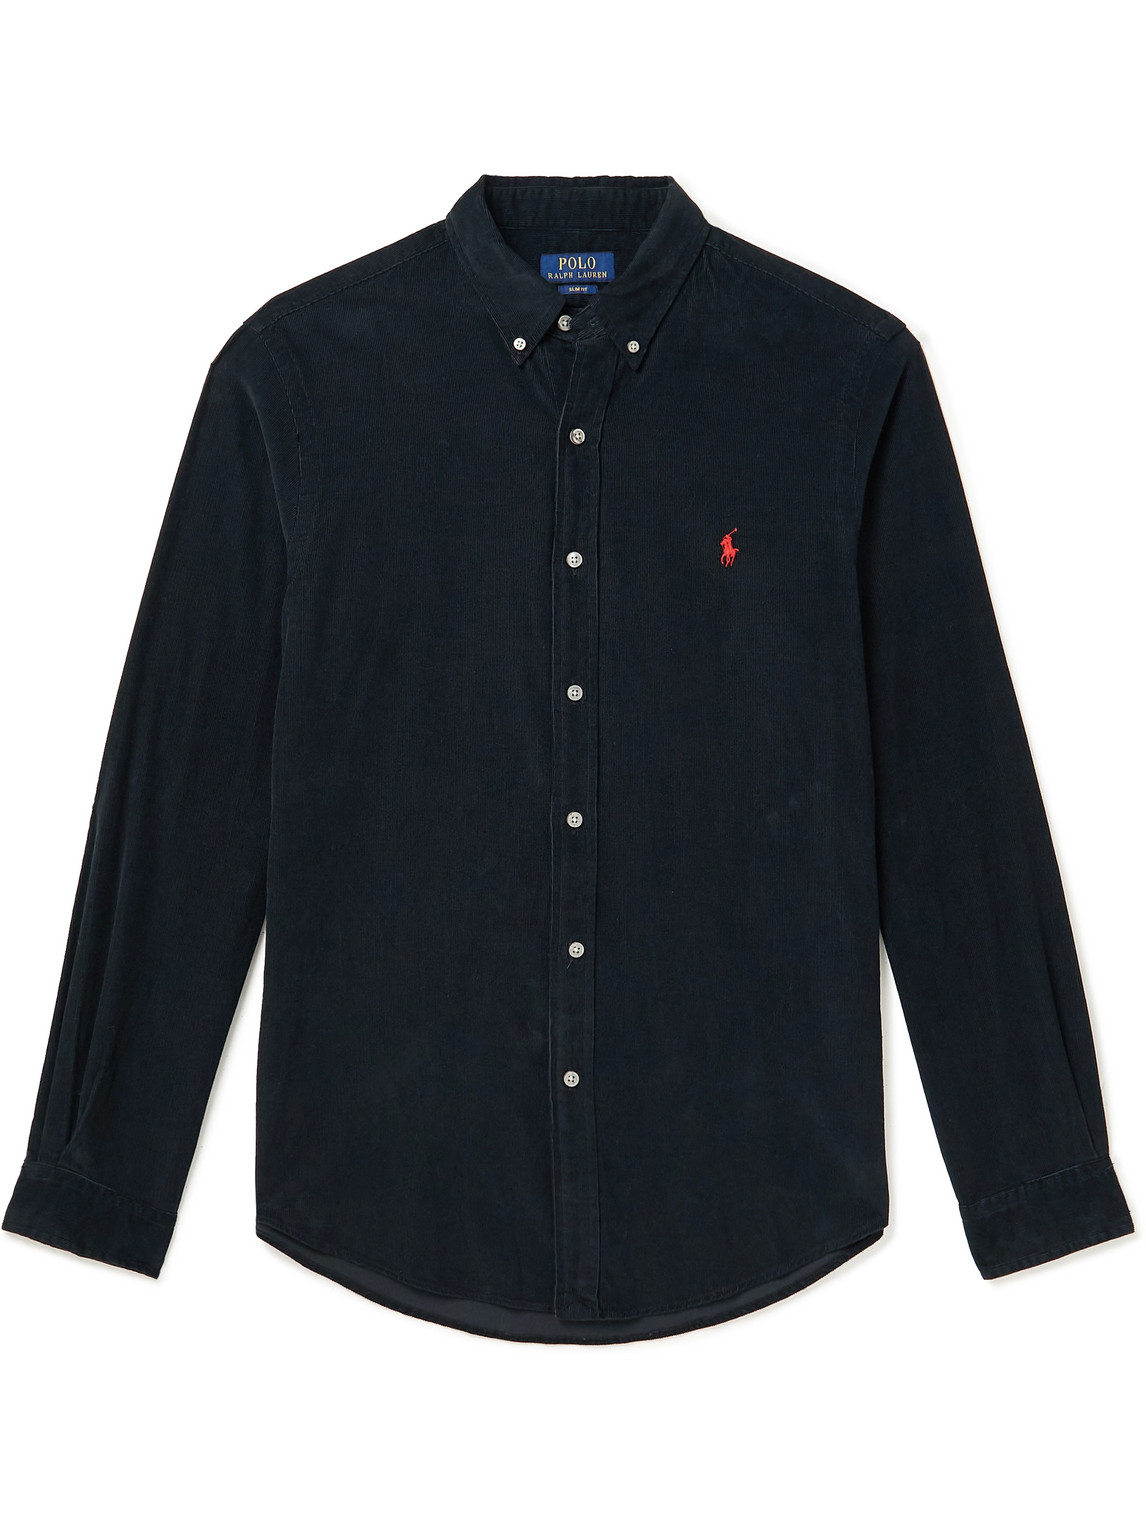 Polo Ralph Lauren - Slim-Fit Button-Down Collar Cotton-Corduroy Shirt - Men - Black - L von Polo Ralph Lauren